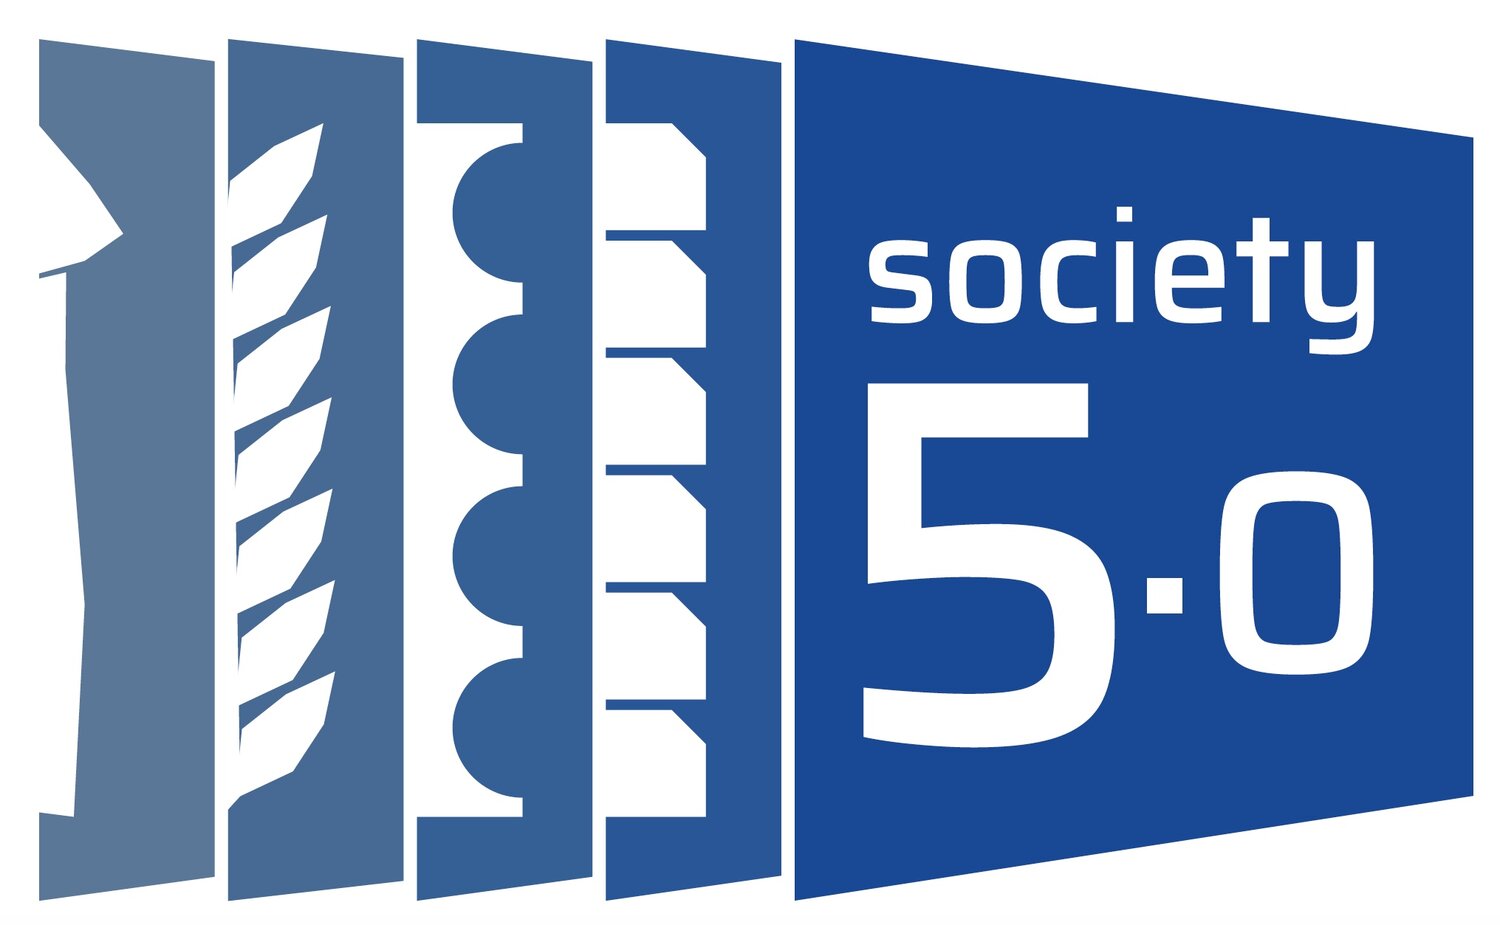 Society6. Общество 5.0. Общество 5.0 Япония. Super Society 5/0. Общество 5.0 в России.